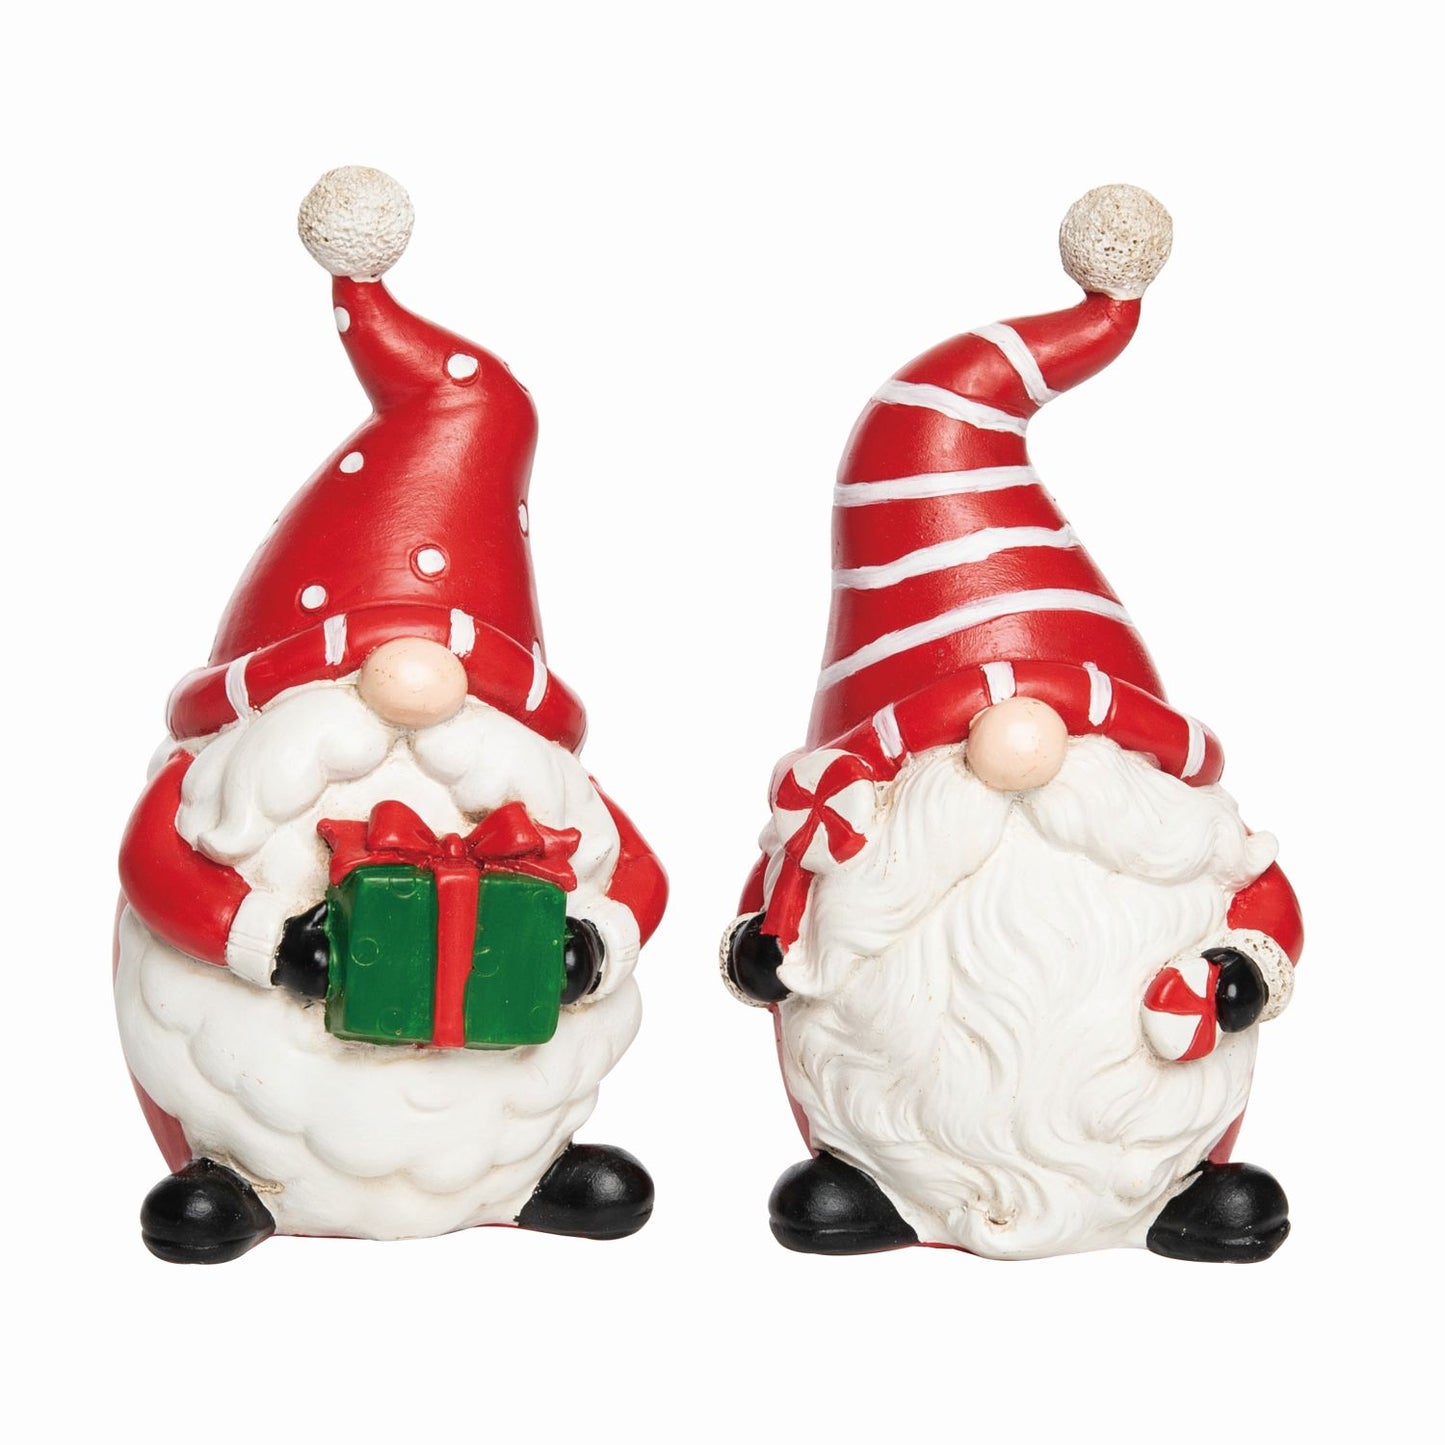 Transpac Resin Happy Holidays Gnome Figurine, Set Of 2, Assortment